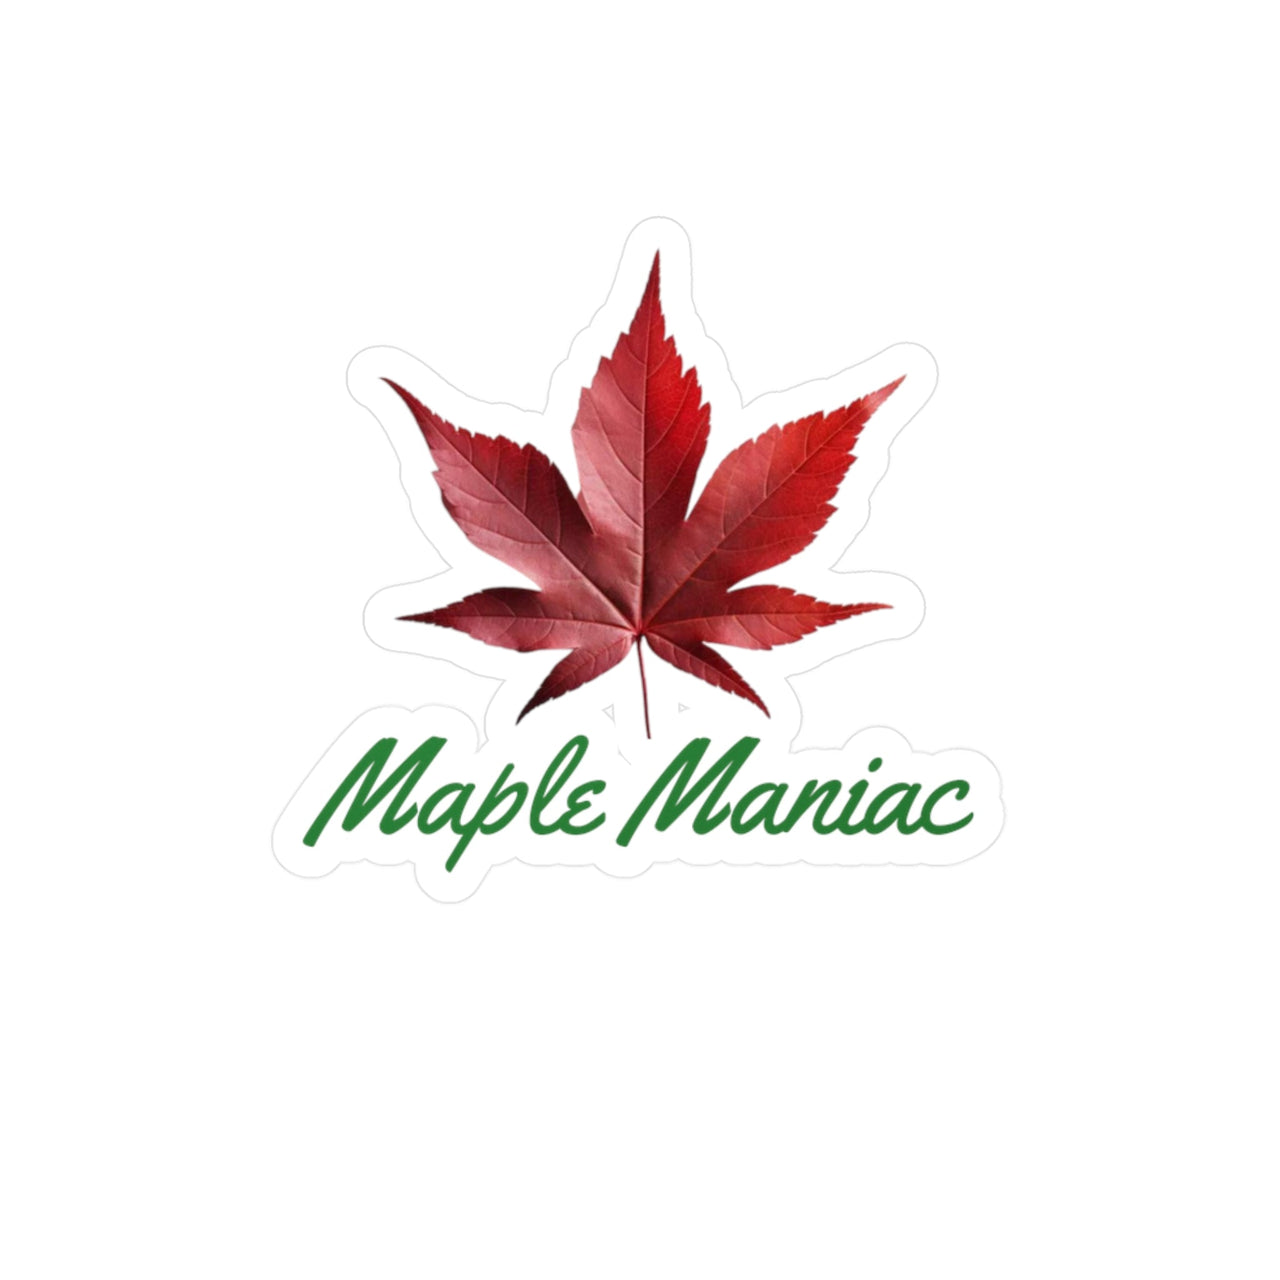 Maple Maniac Vinyl Decal - Maple Ridge Nursery